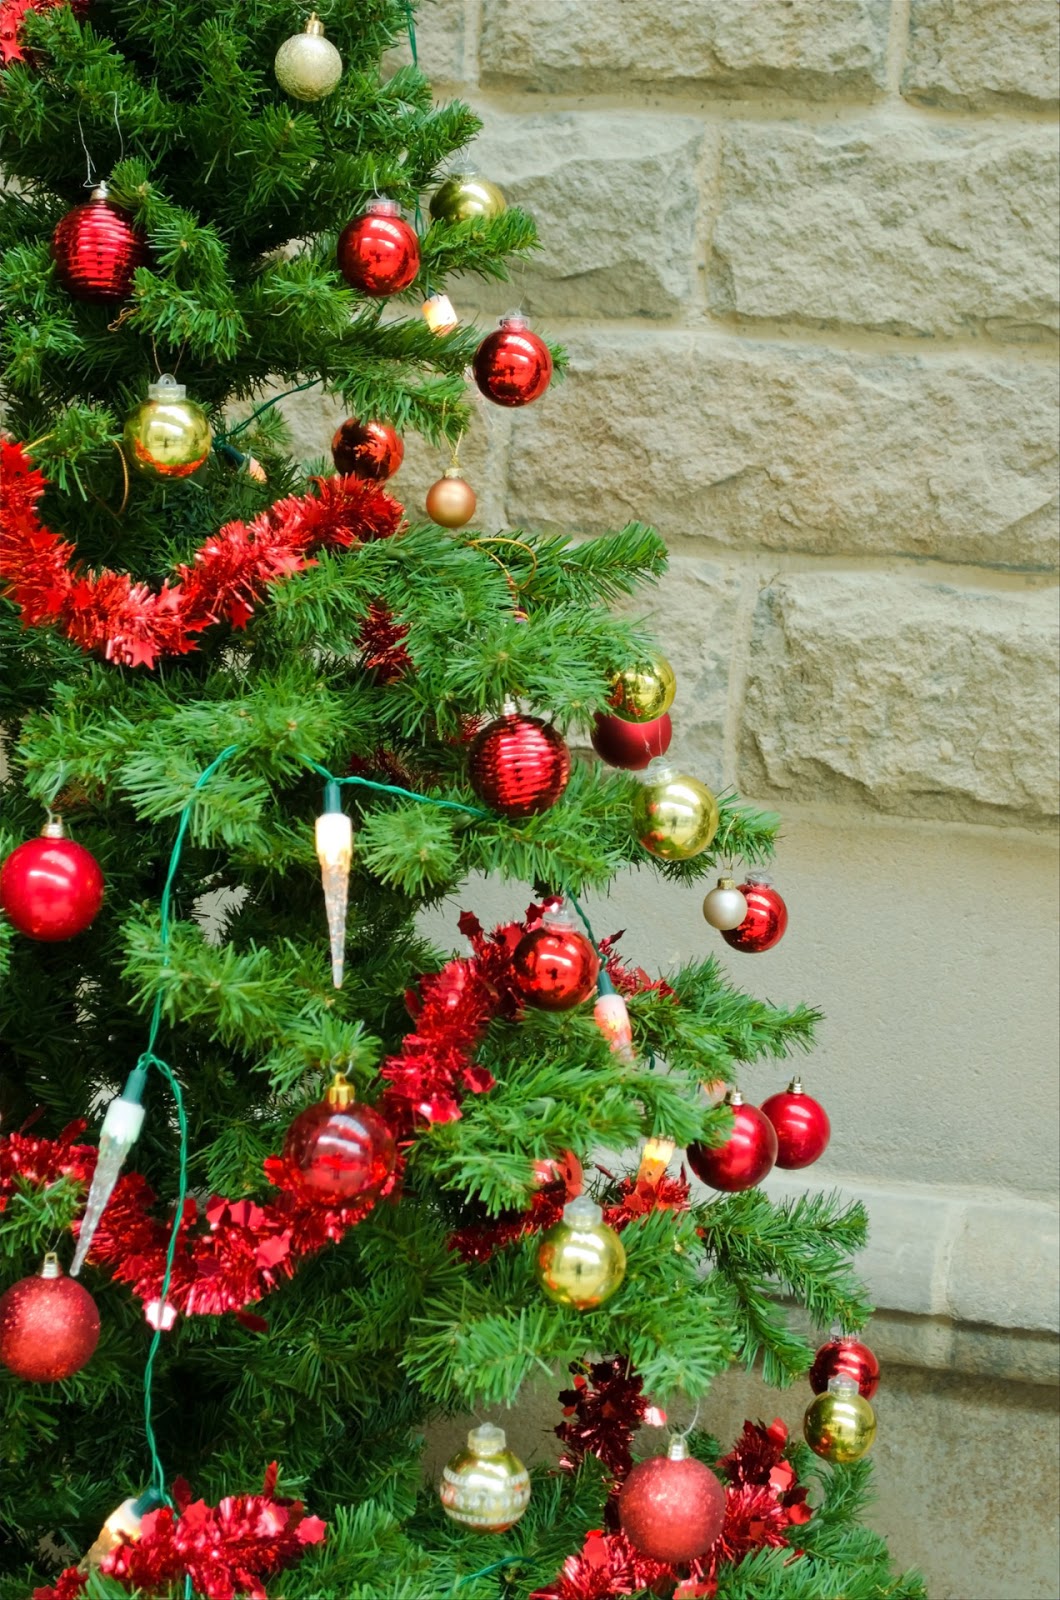 RETRO KIMMER'S BLOG: AMAZING CHRISTMAS TREES!